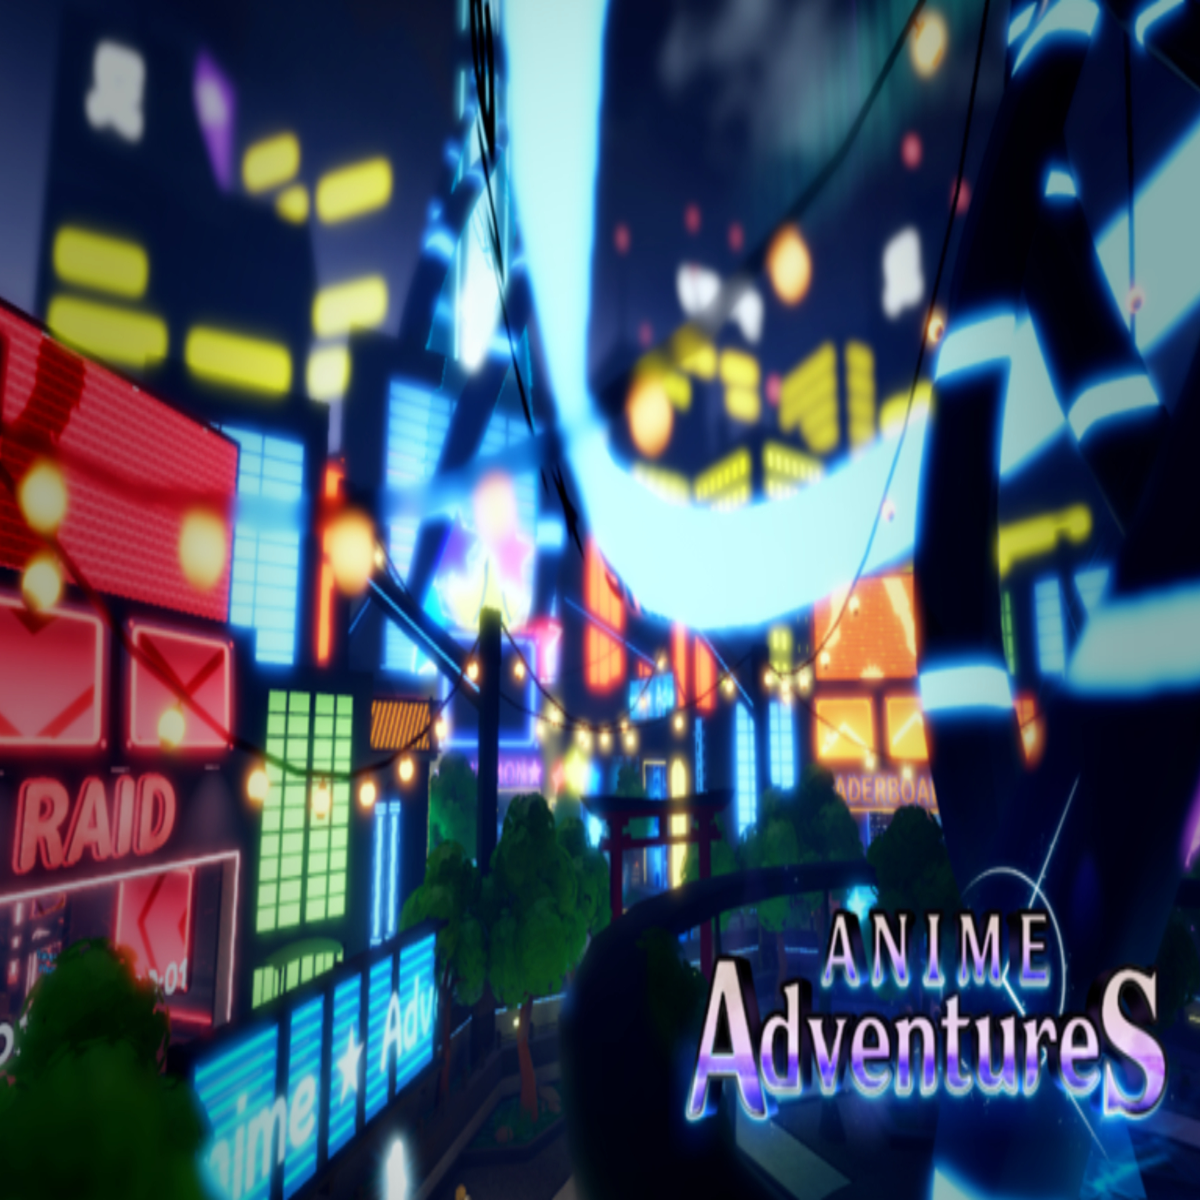 Anime Adventures Codes 2023 : r/RobloxCodesFree